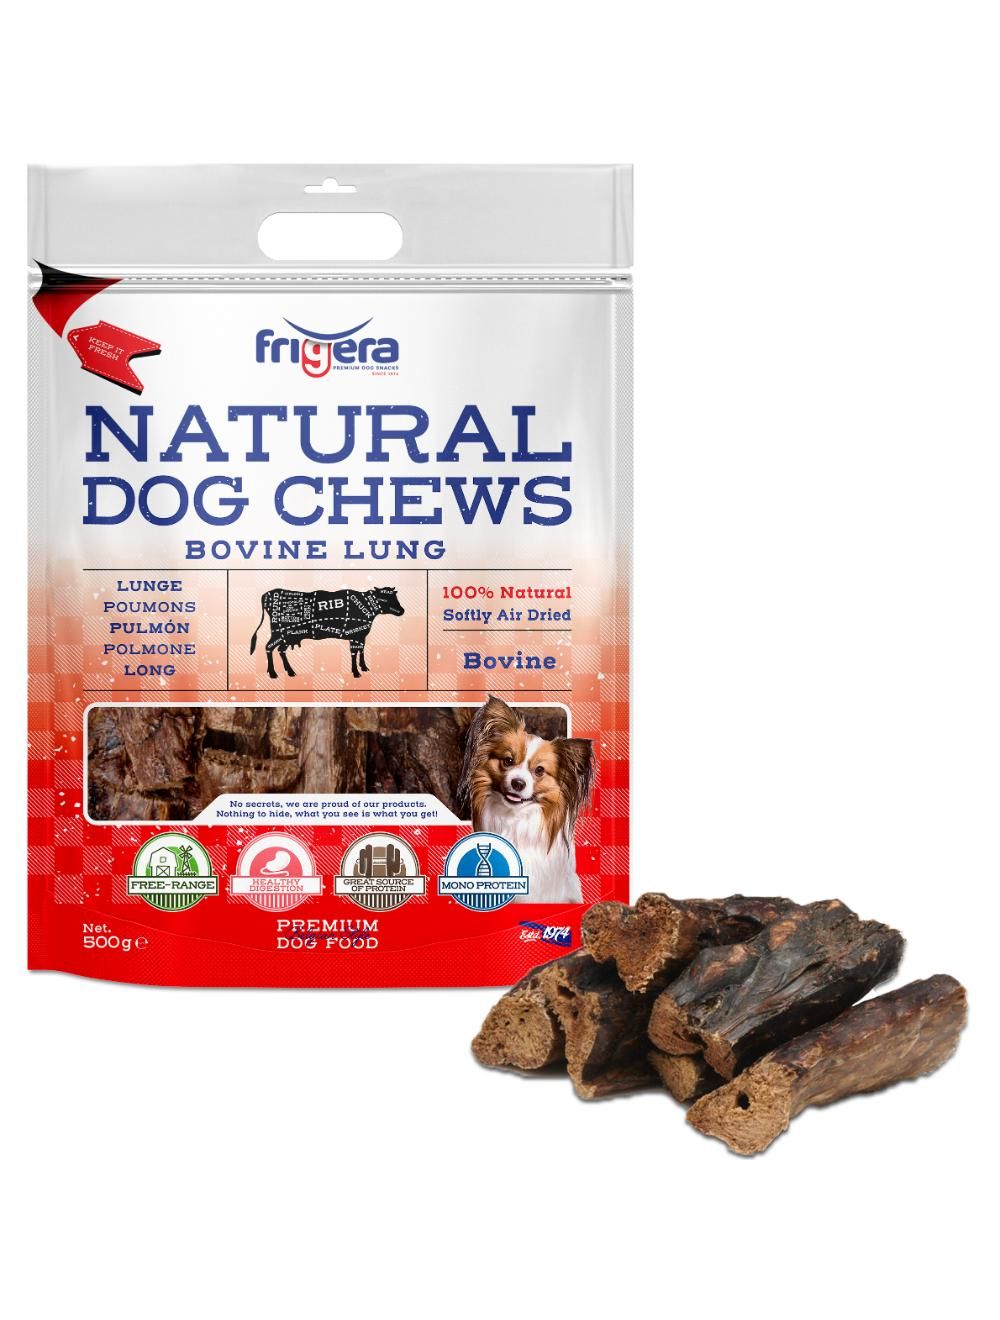 Frigera - Natural Dog Chews Bovine lung 500 g - (402285851811) - Kjæledyr og utstyr